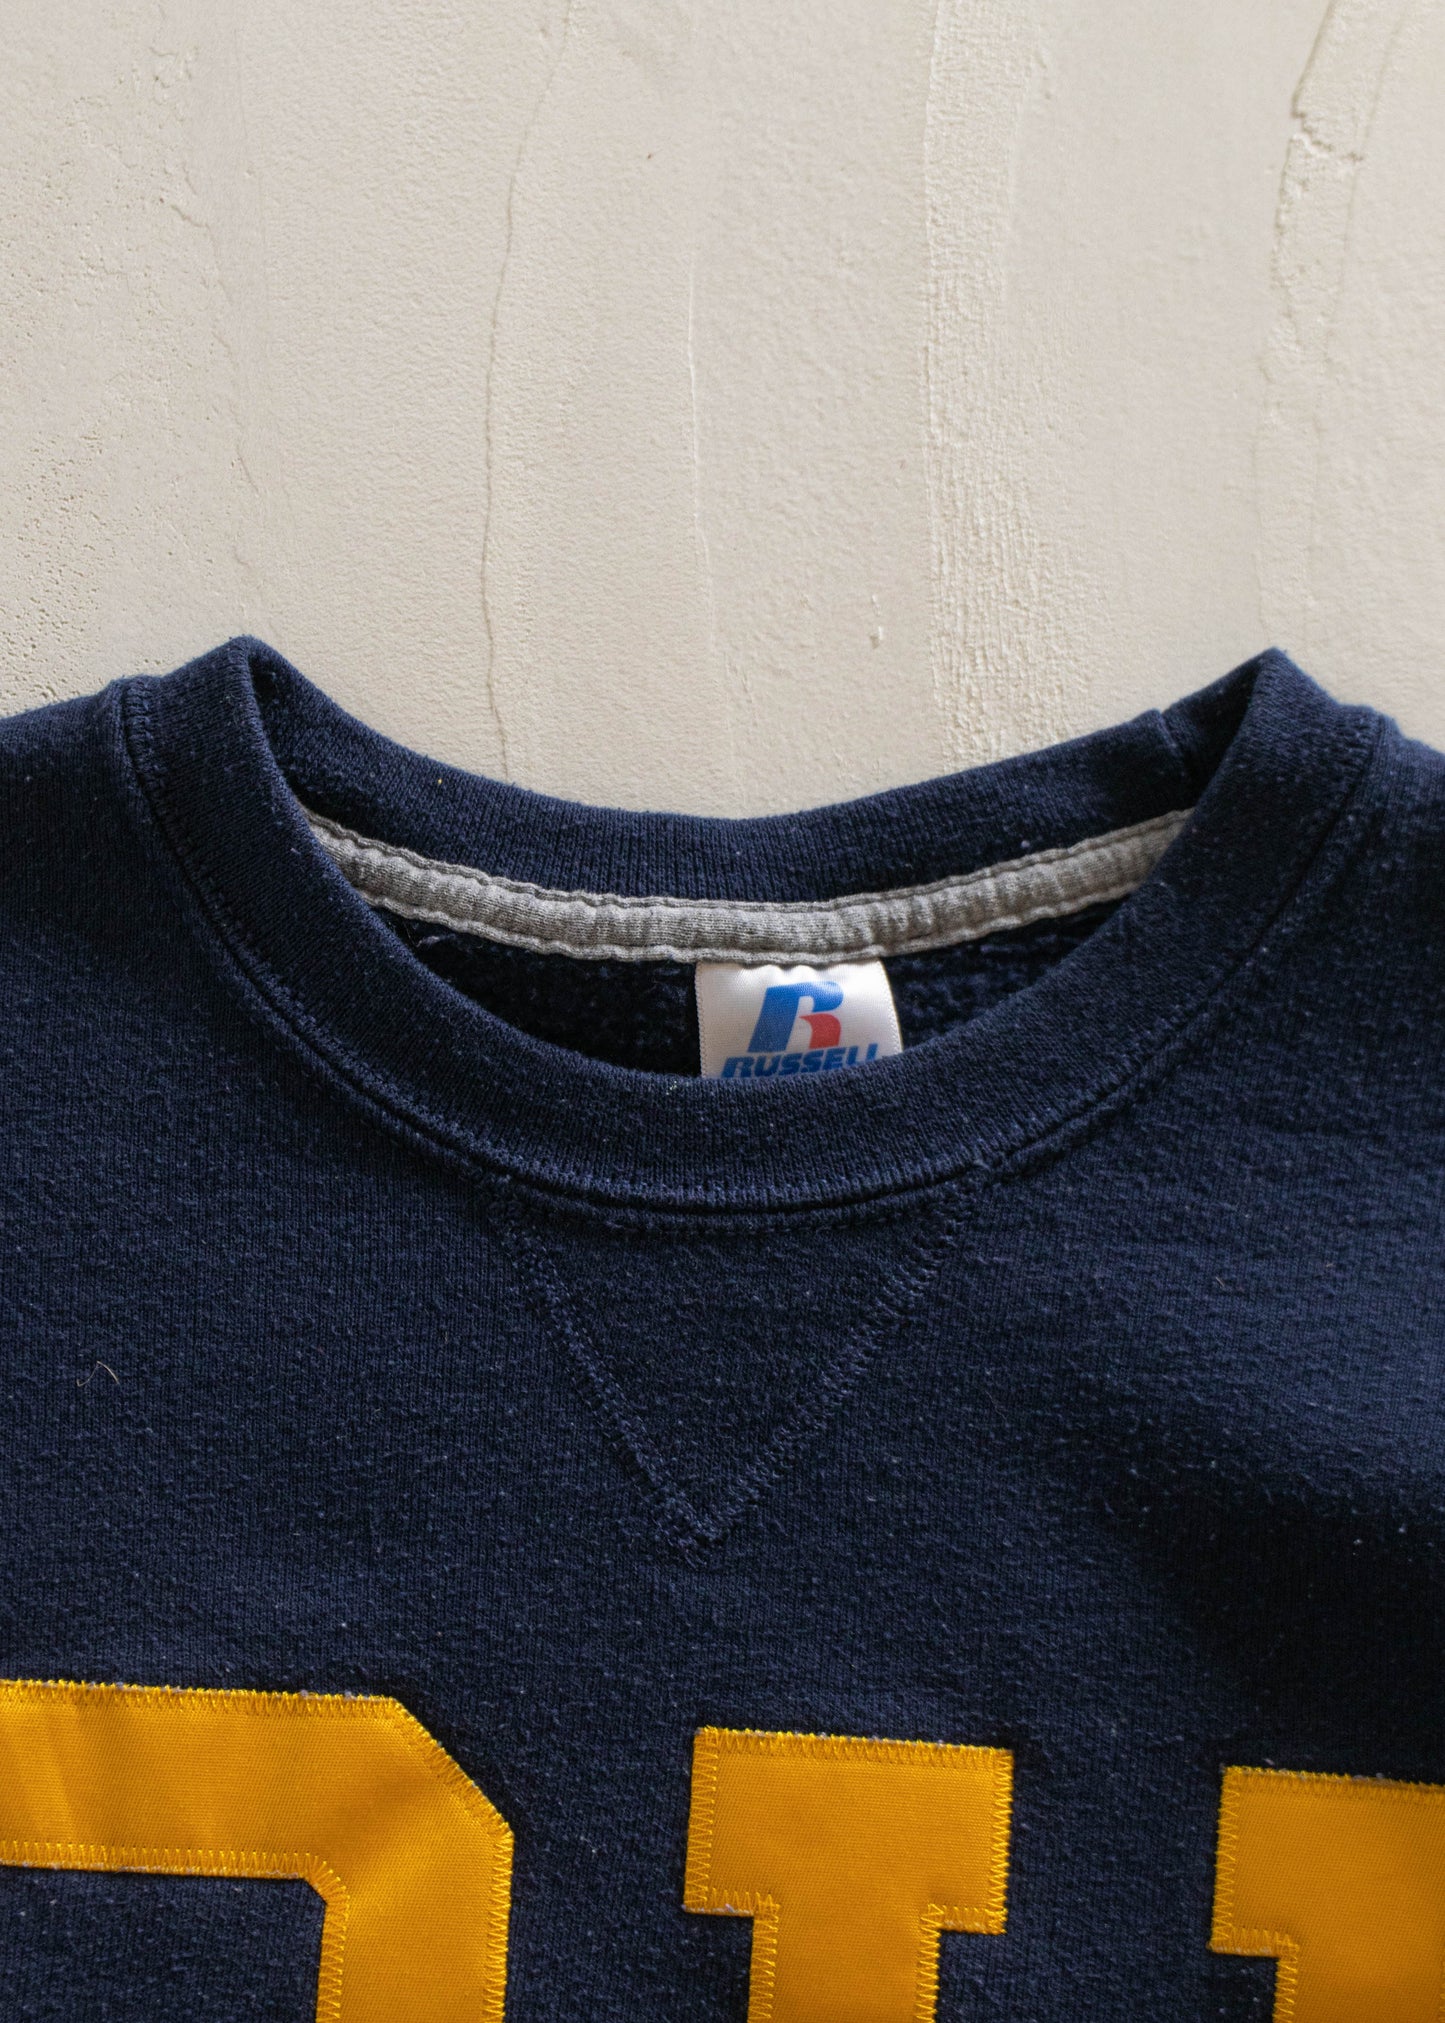 Y2K Russel Athletic University Sweatshirt Size XS/S